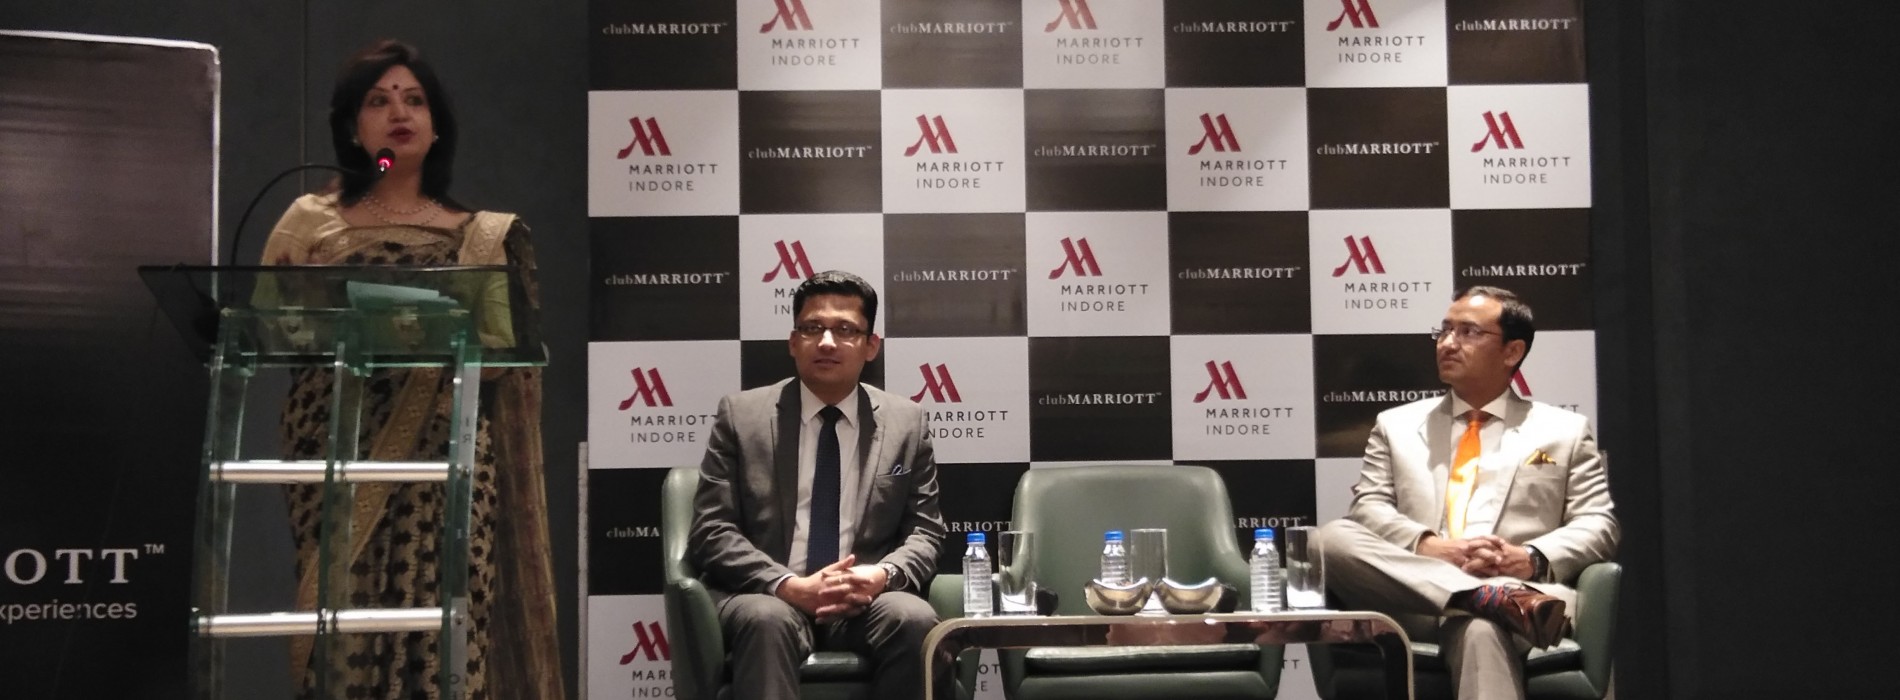 Indore Marriott Hotel launches new Club Marriott program